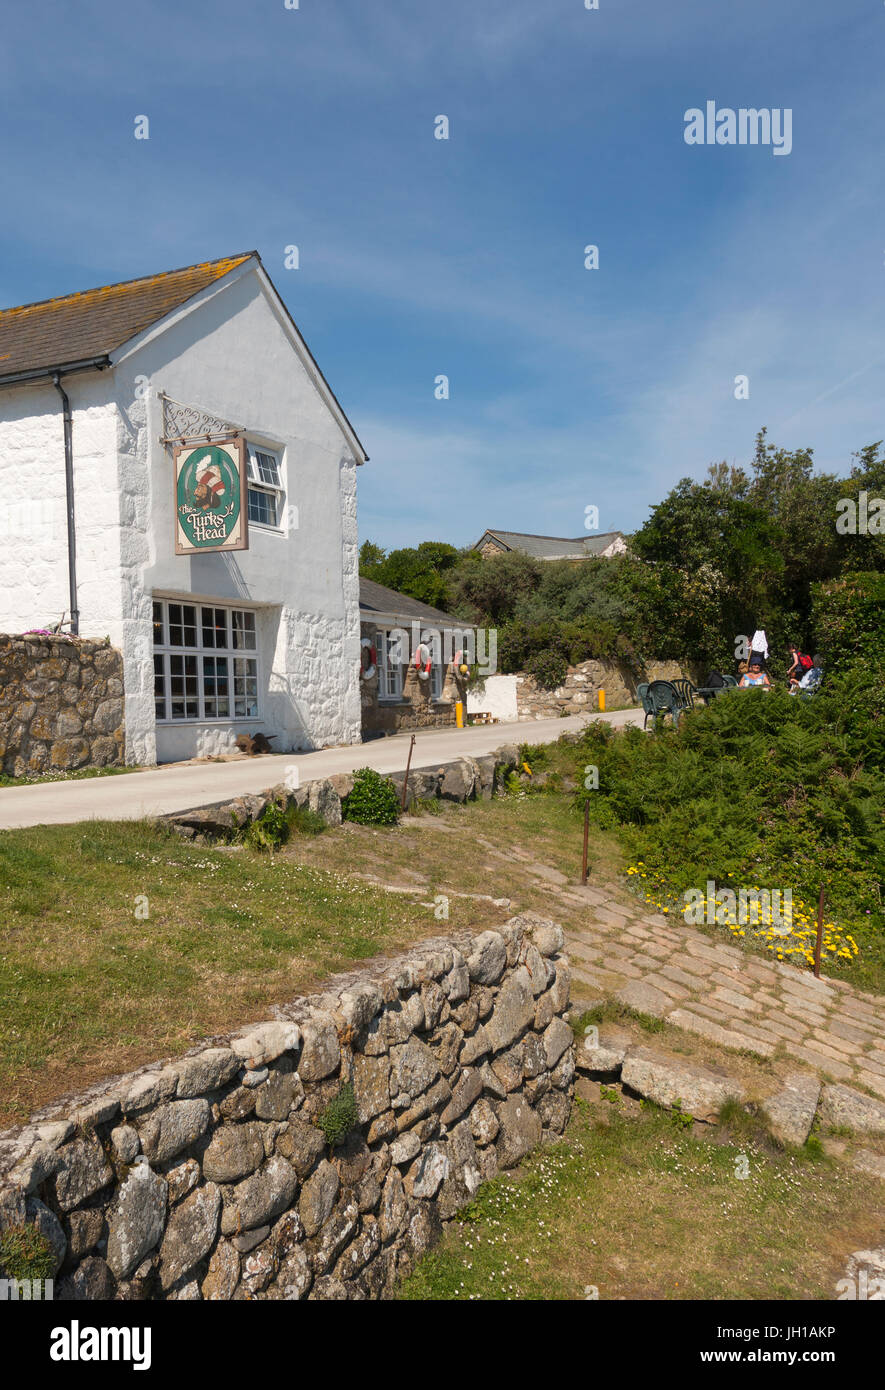 Die Turks Head Pub in St. Agnes, Isles of Scilly, Cornwall England UK.  Die einzige Publikation auf der Insel. Stockfoto